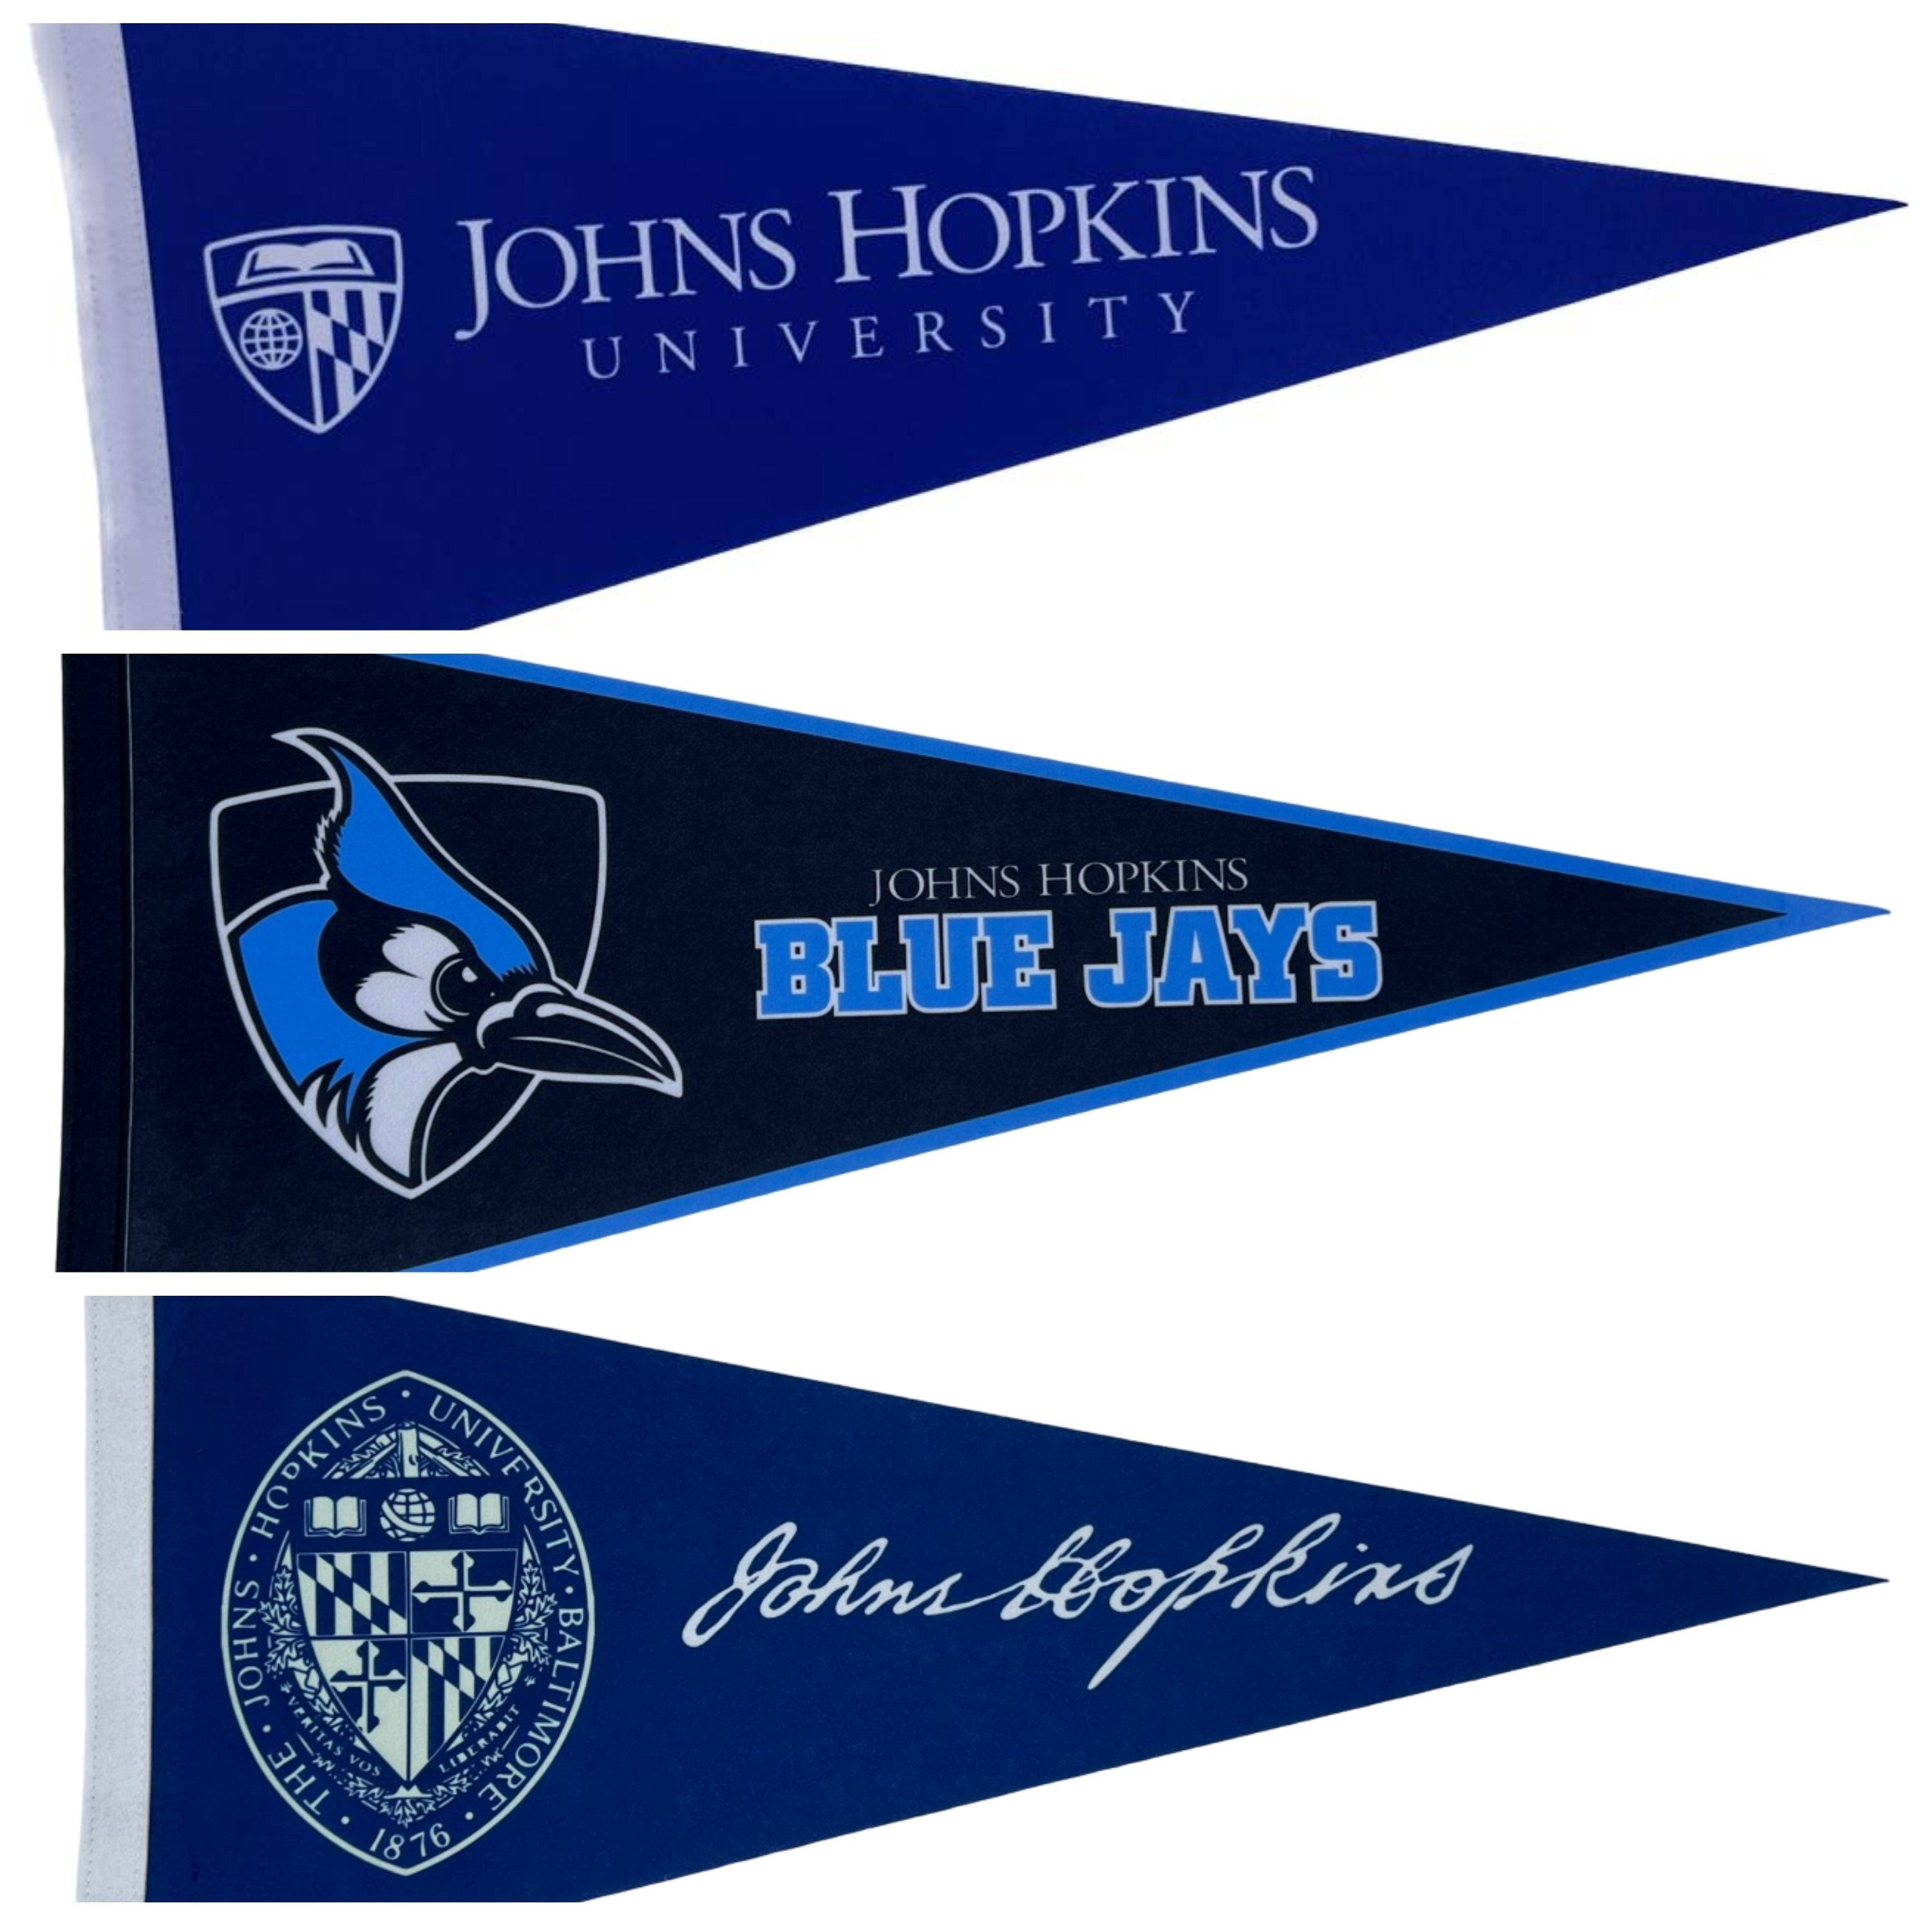 John Hopkins University wimpels vaantje vlaggetje vlag fanion wimpel vlag fahne drapeau john hopkins gift uni hopkins vlag - Cursive